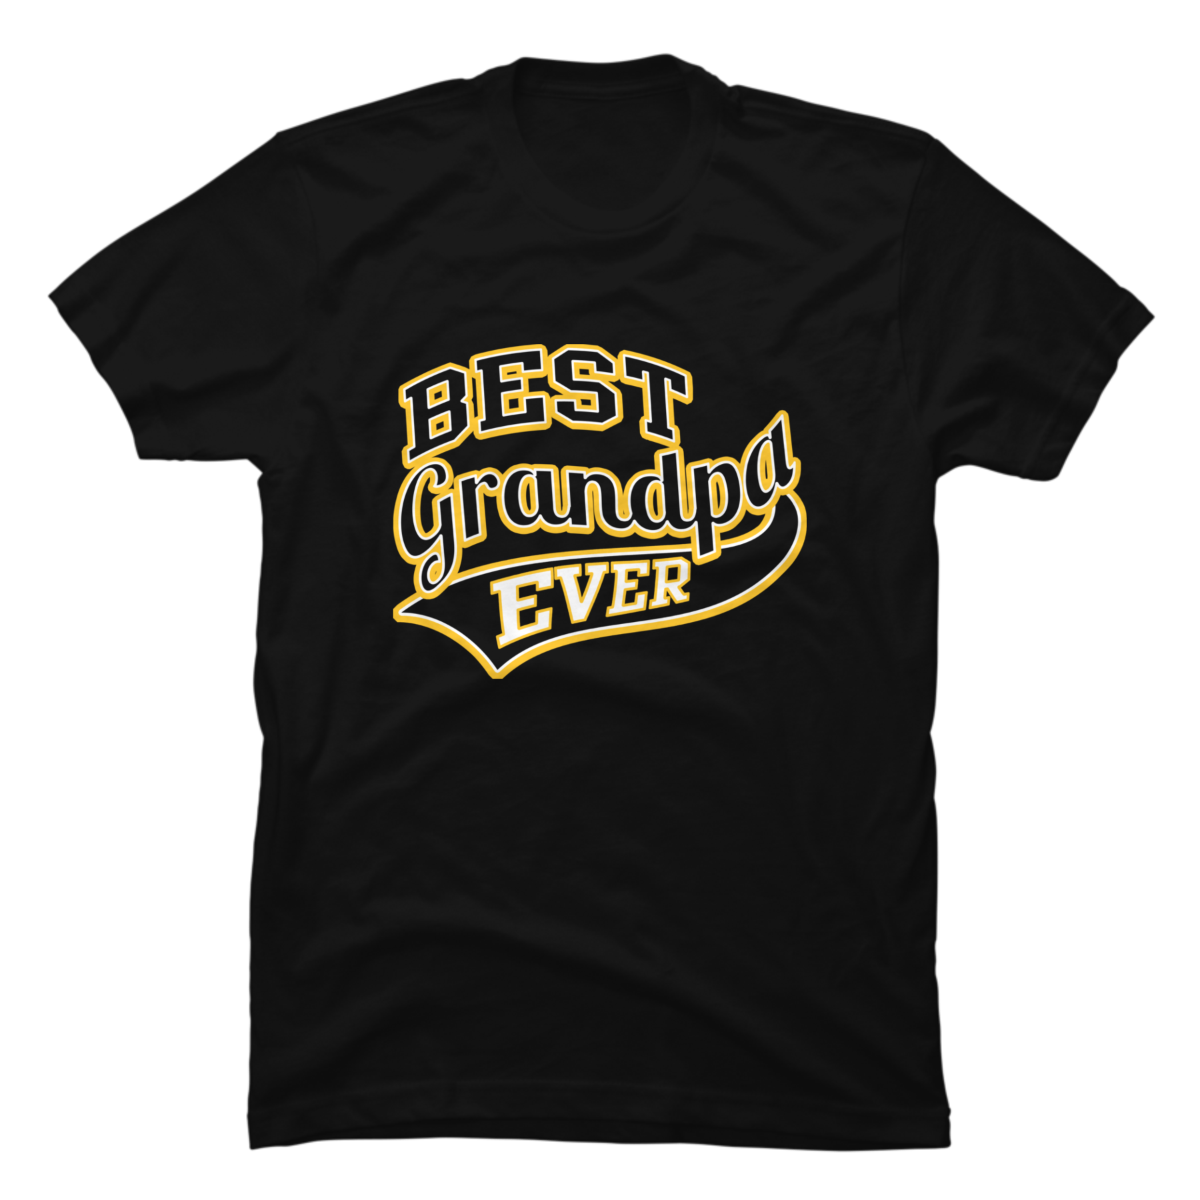 Best Grandpa Ever - Buy t-shirt designs